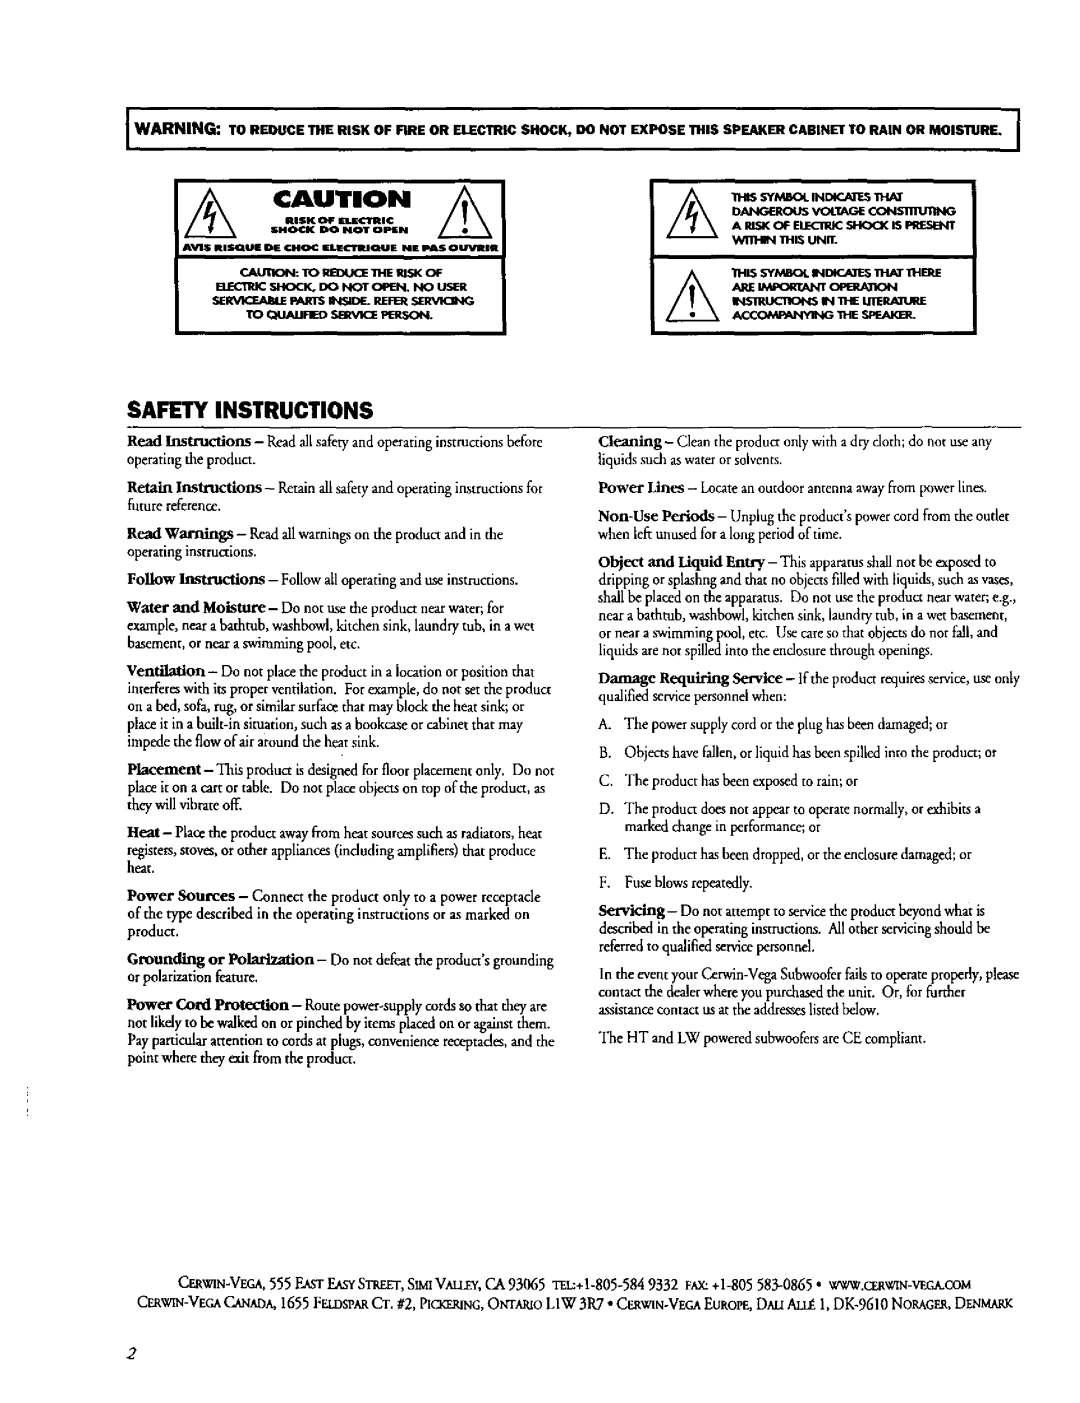 Cerwin-Vega SM-LW12 warranty Safety Instructions 